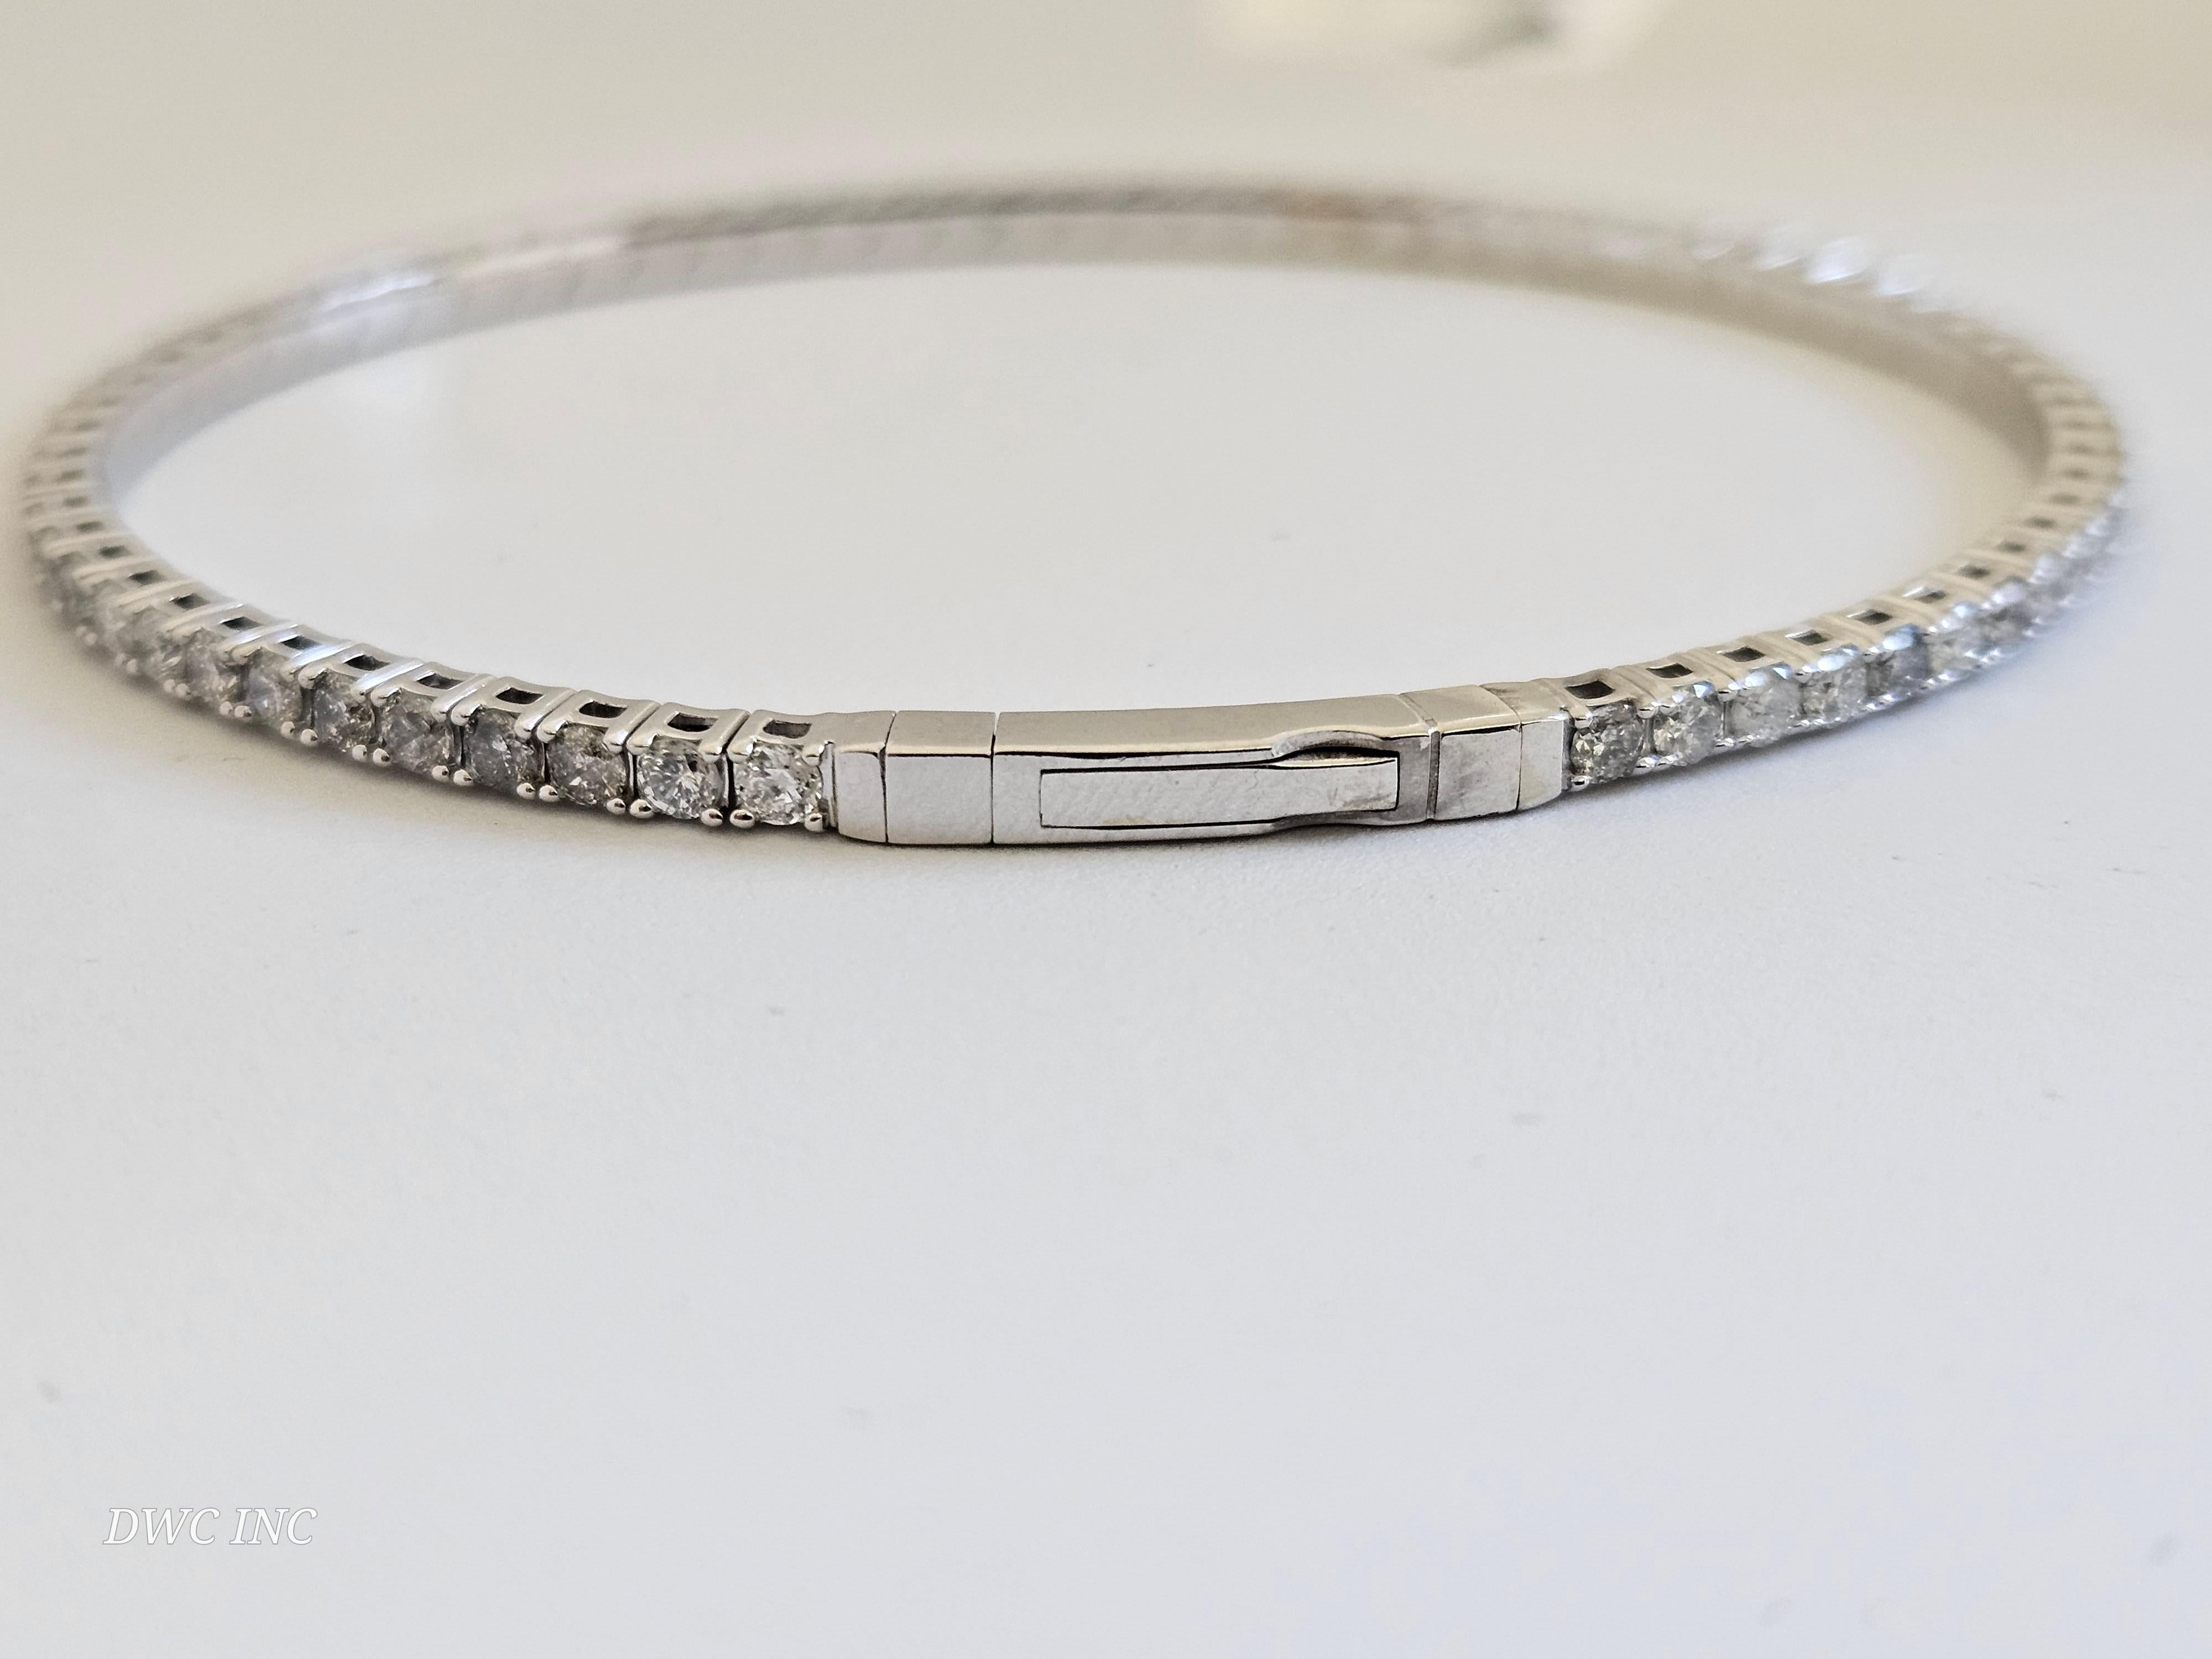 2.25 Carat Natural Diamond Bangle bracelet round-brilliant cut  14k White Gold. 
7 inch. 72pcs Average H-,I  2.4 mm wide. Very Shiny 7.86 grams.

*Free shipping within the U.S.*